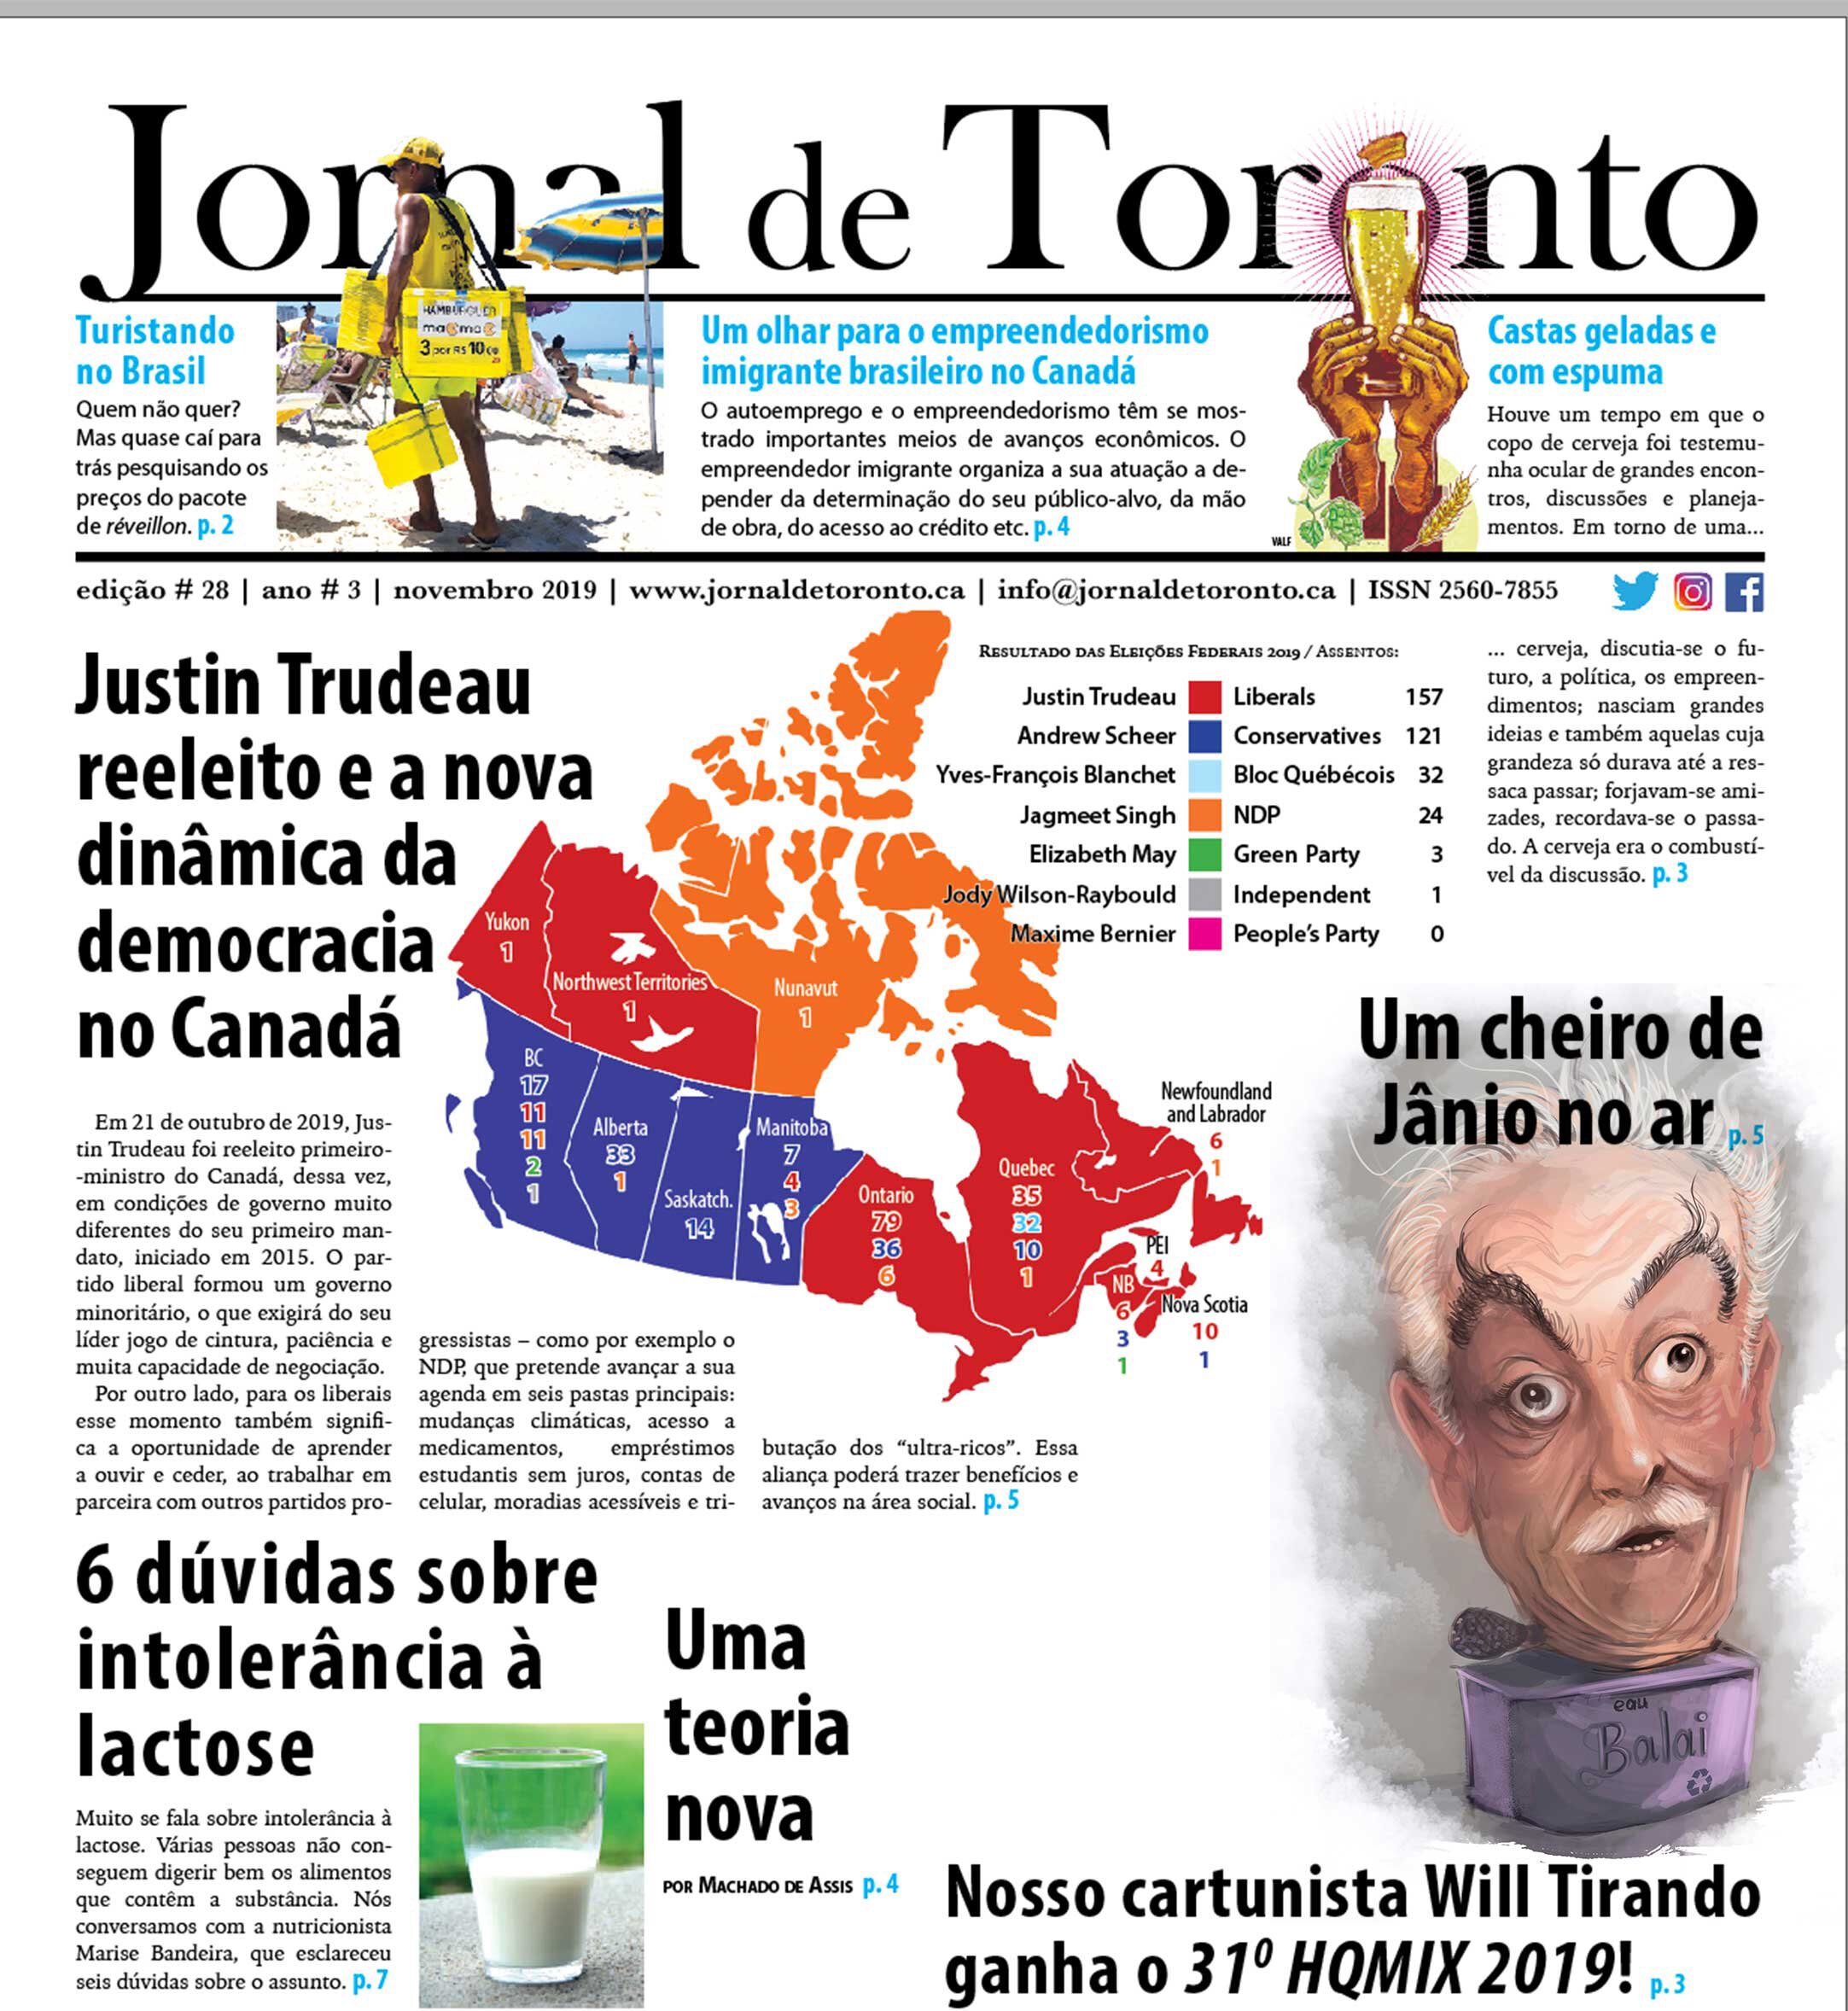 Cover page issue 28 "Jornal de Toronto"